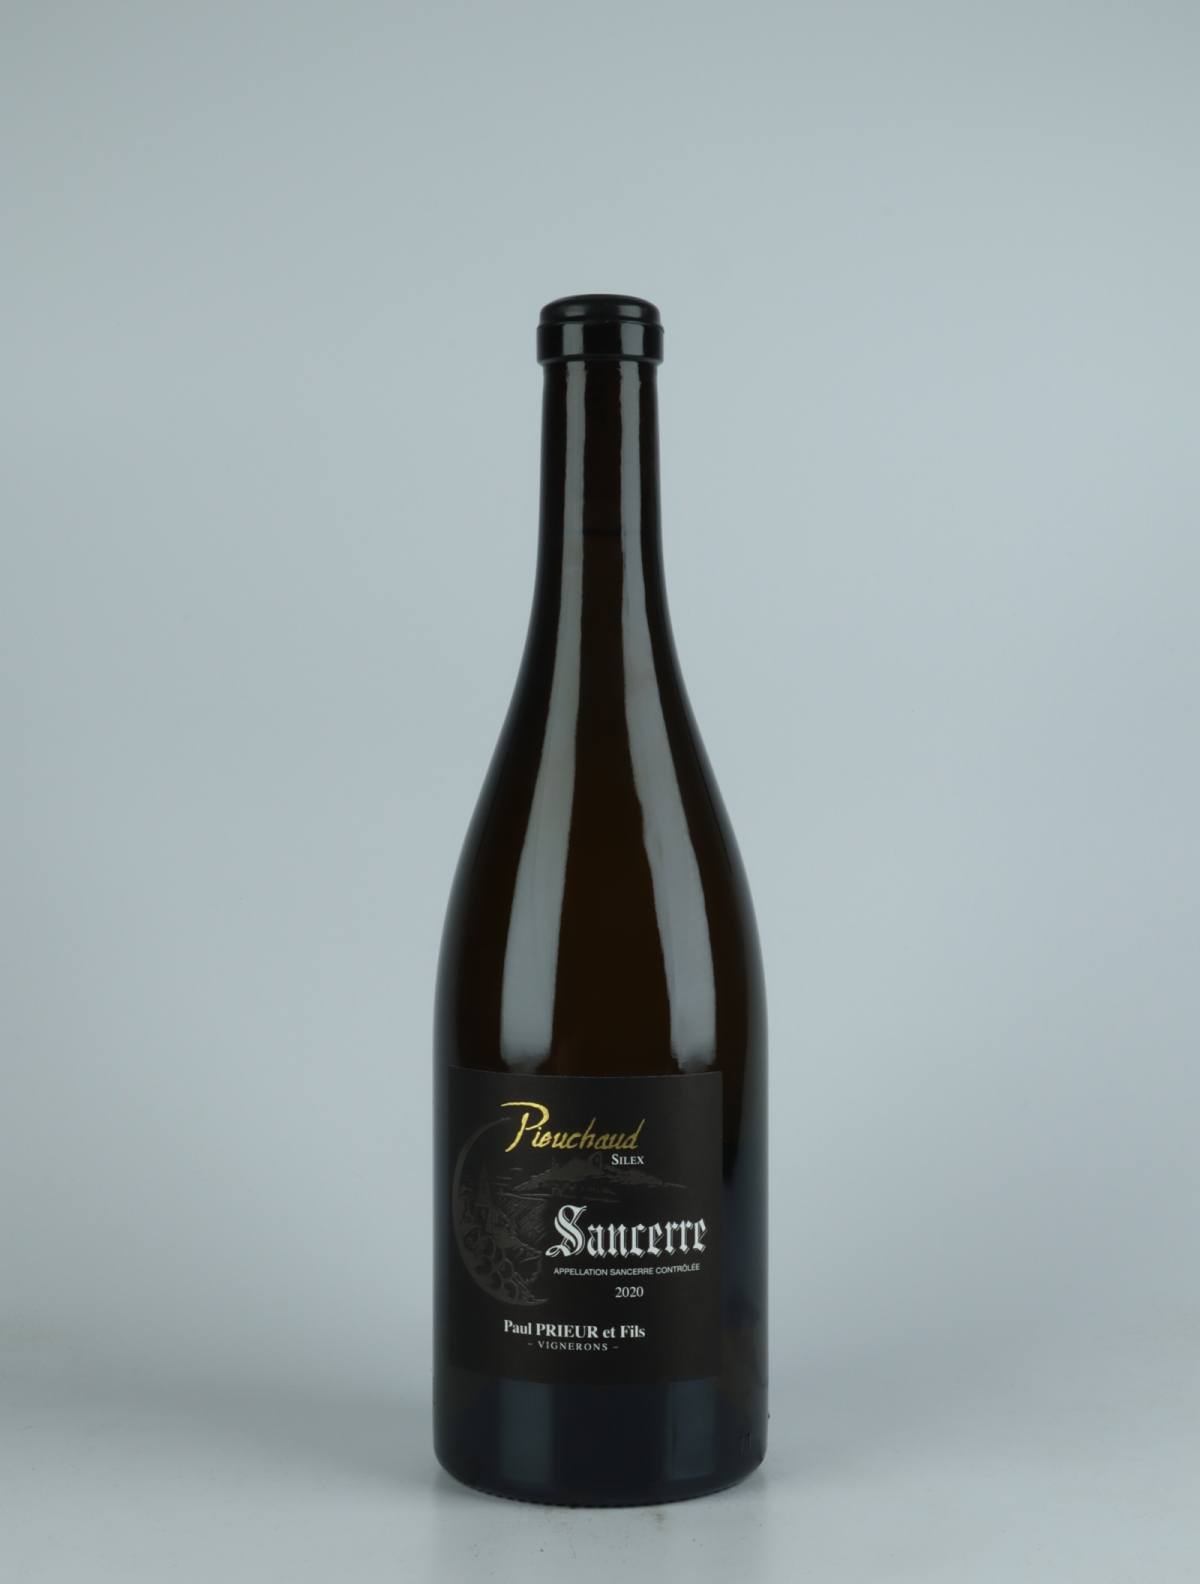 En flaske 2020 Sancerre - Pieuchaud Silex Hvidvin fra Paul Prieur et Fils, Loire i Frankrig